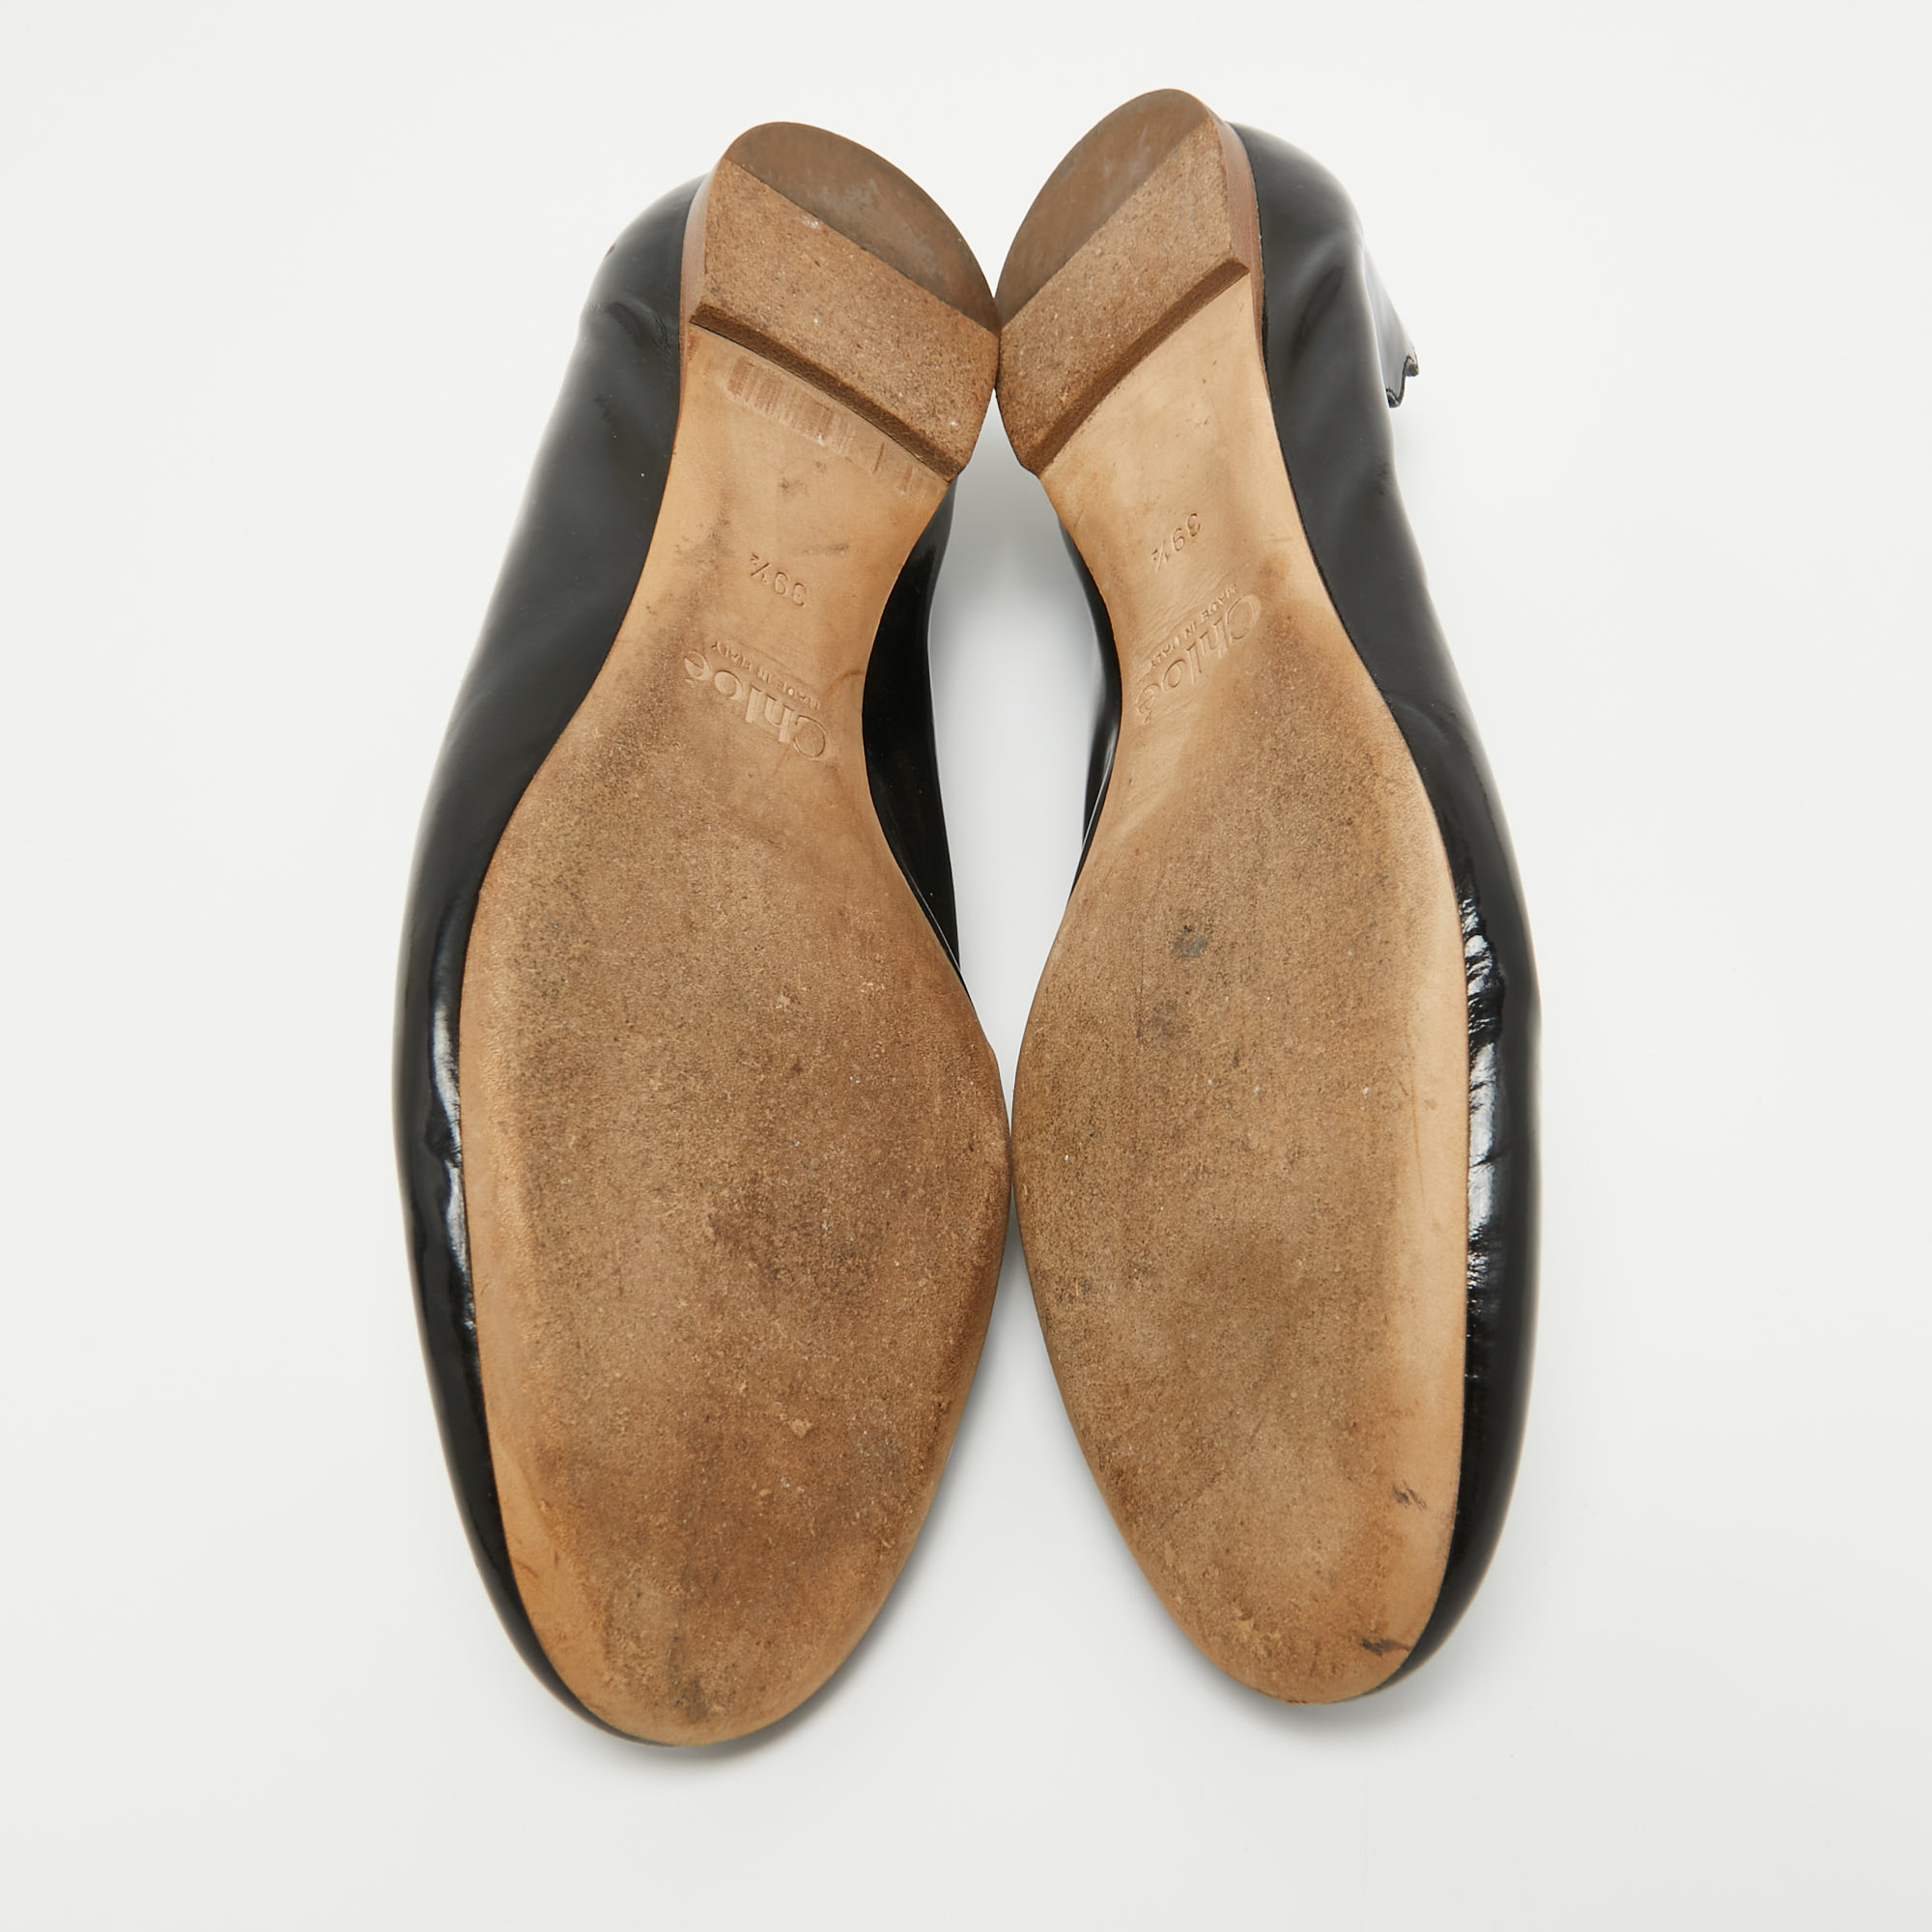 Chloe Black Patent Leather Laurena Scalloped Ballet Flats Size 39.5